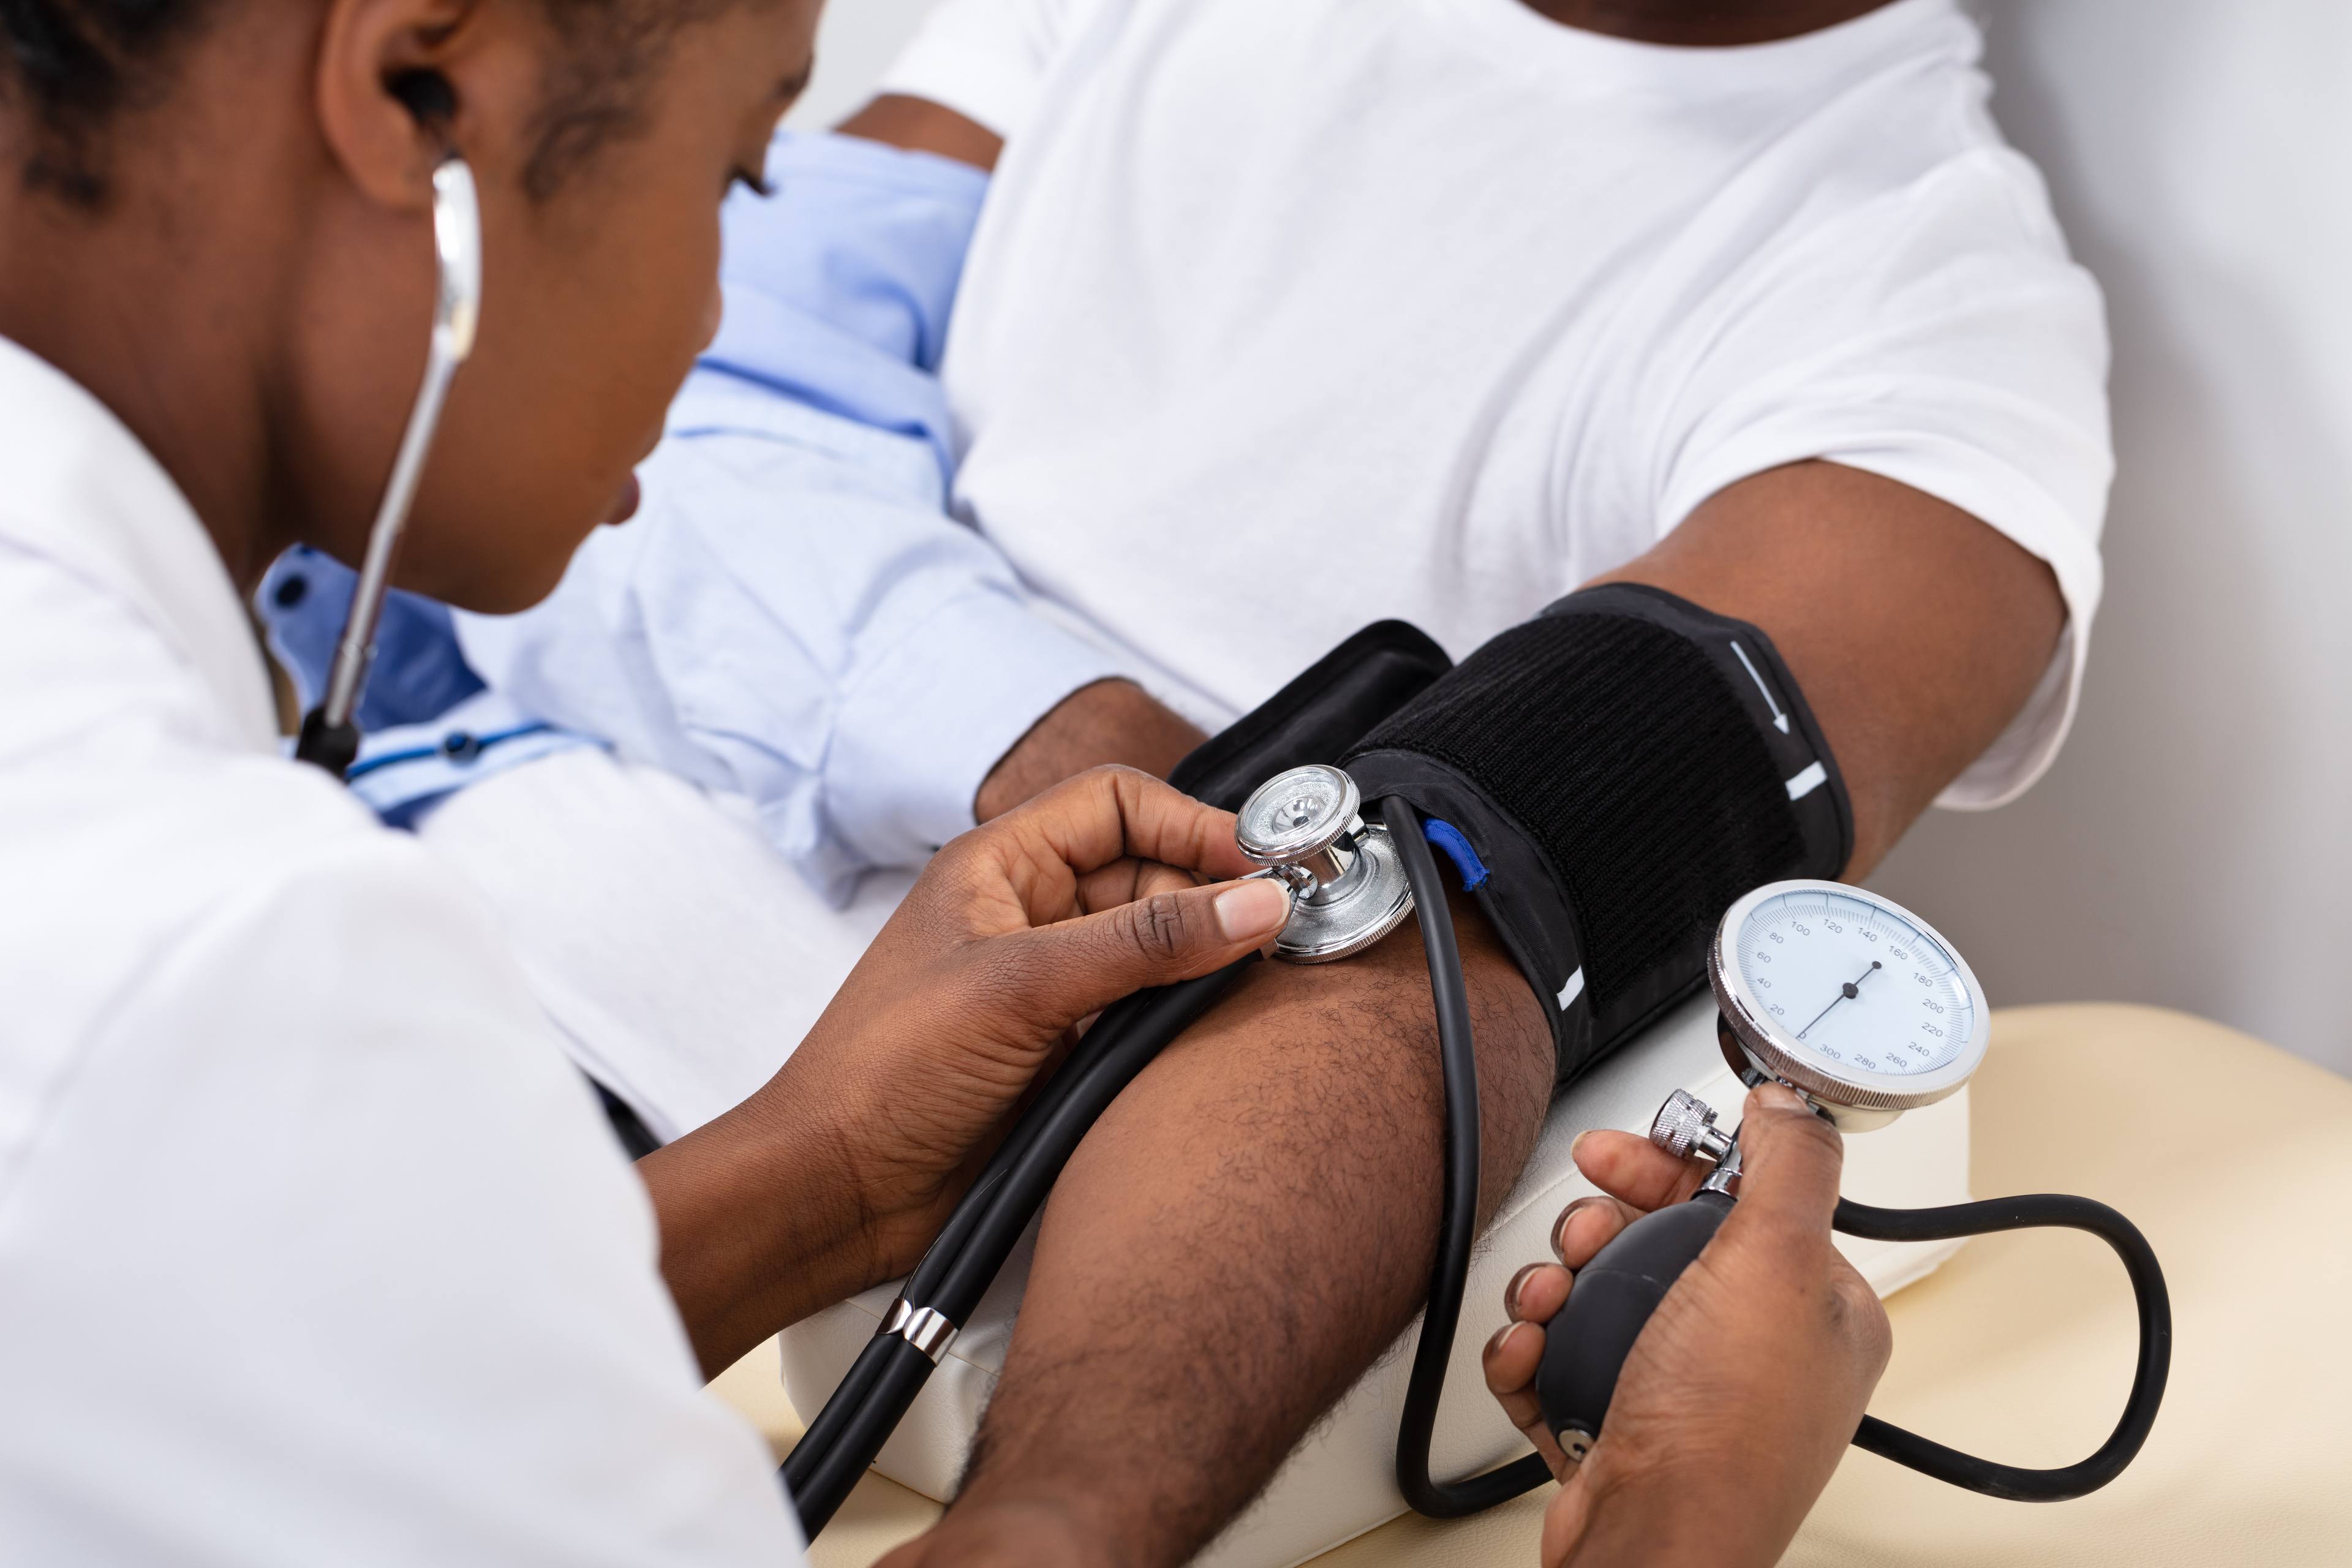 Doctor checks blood pressure of patient